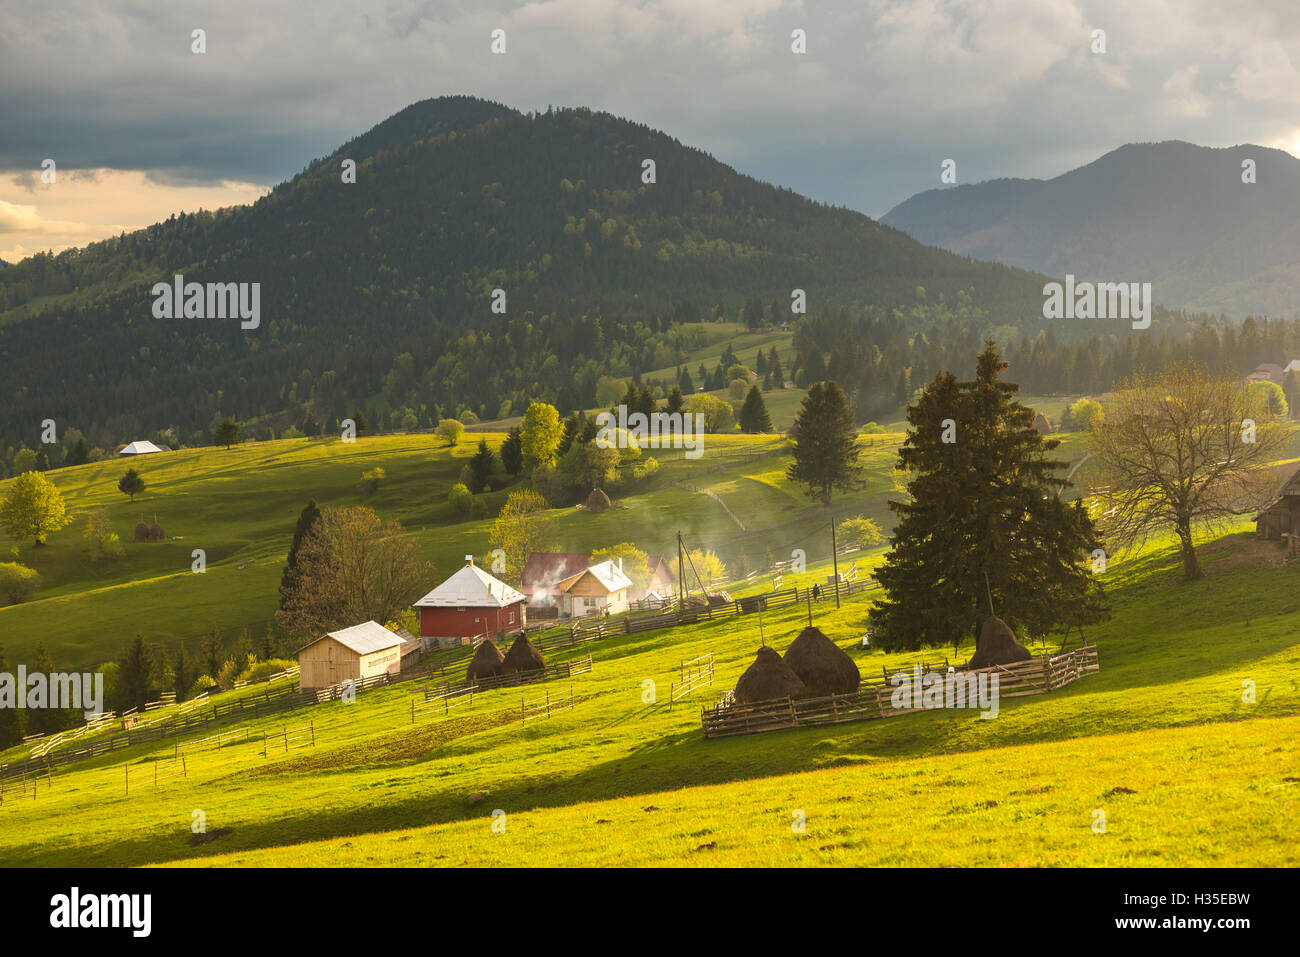 Farm and haystacks in the rural Transylvania landscape at sunset, Piatra Fantanele, Transylvania, Romania Stock Photo